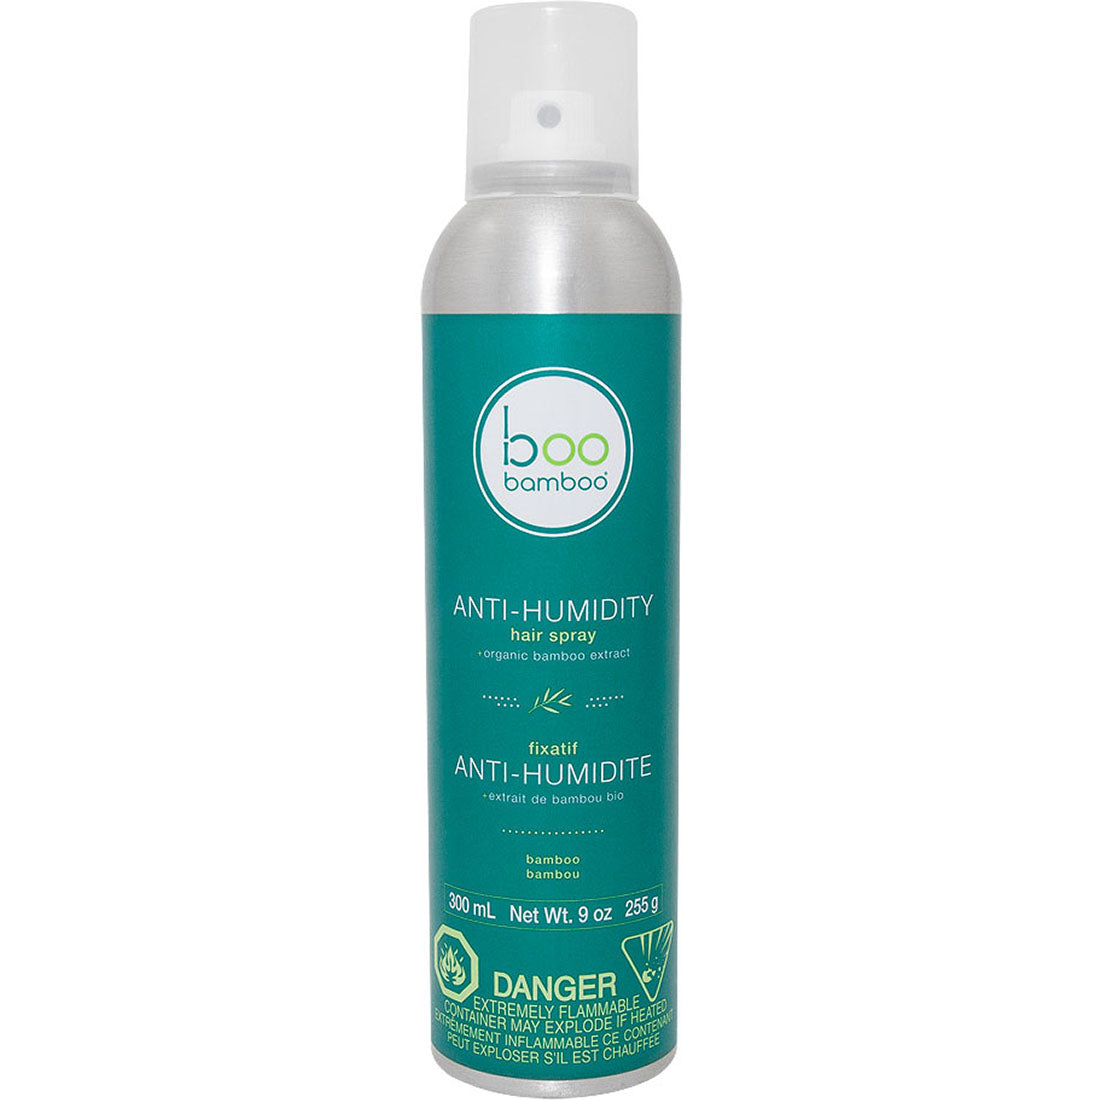 Boo Bamboo Anti-Humidity Hair Spray, 300ml